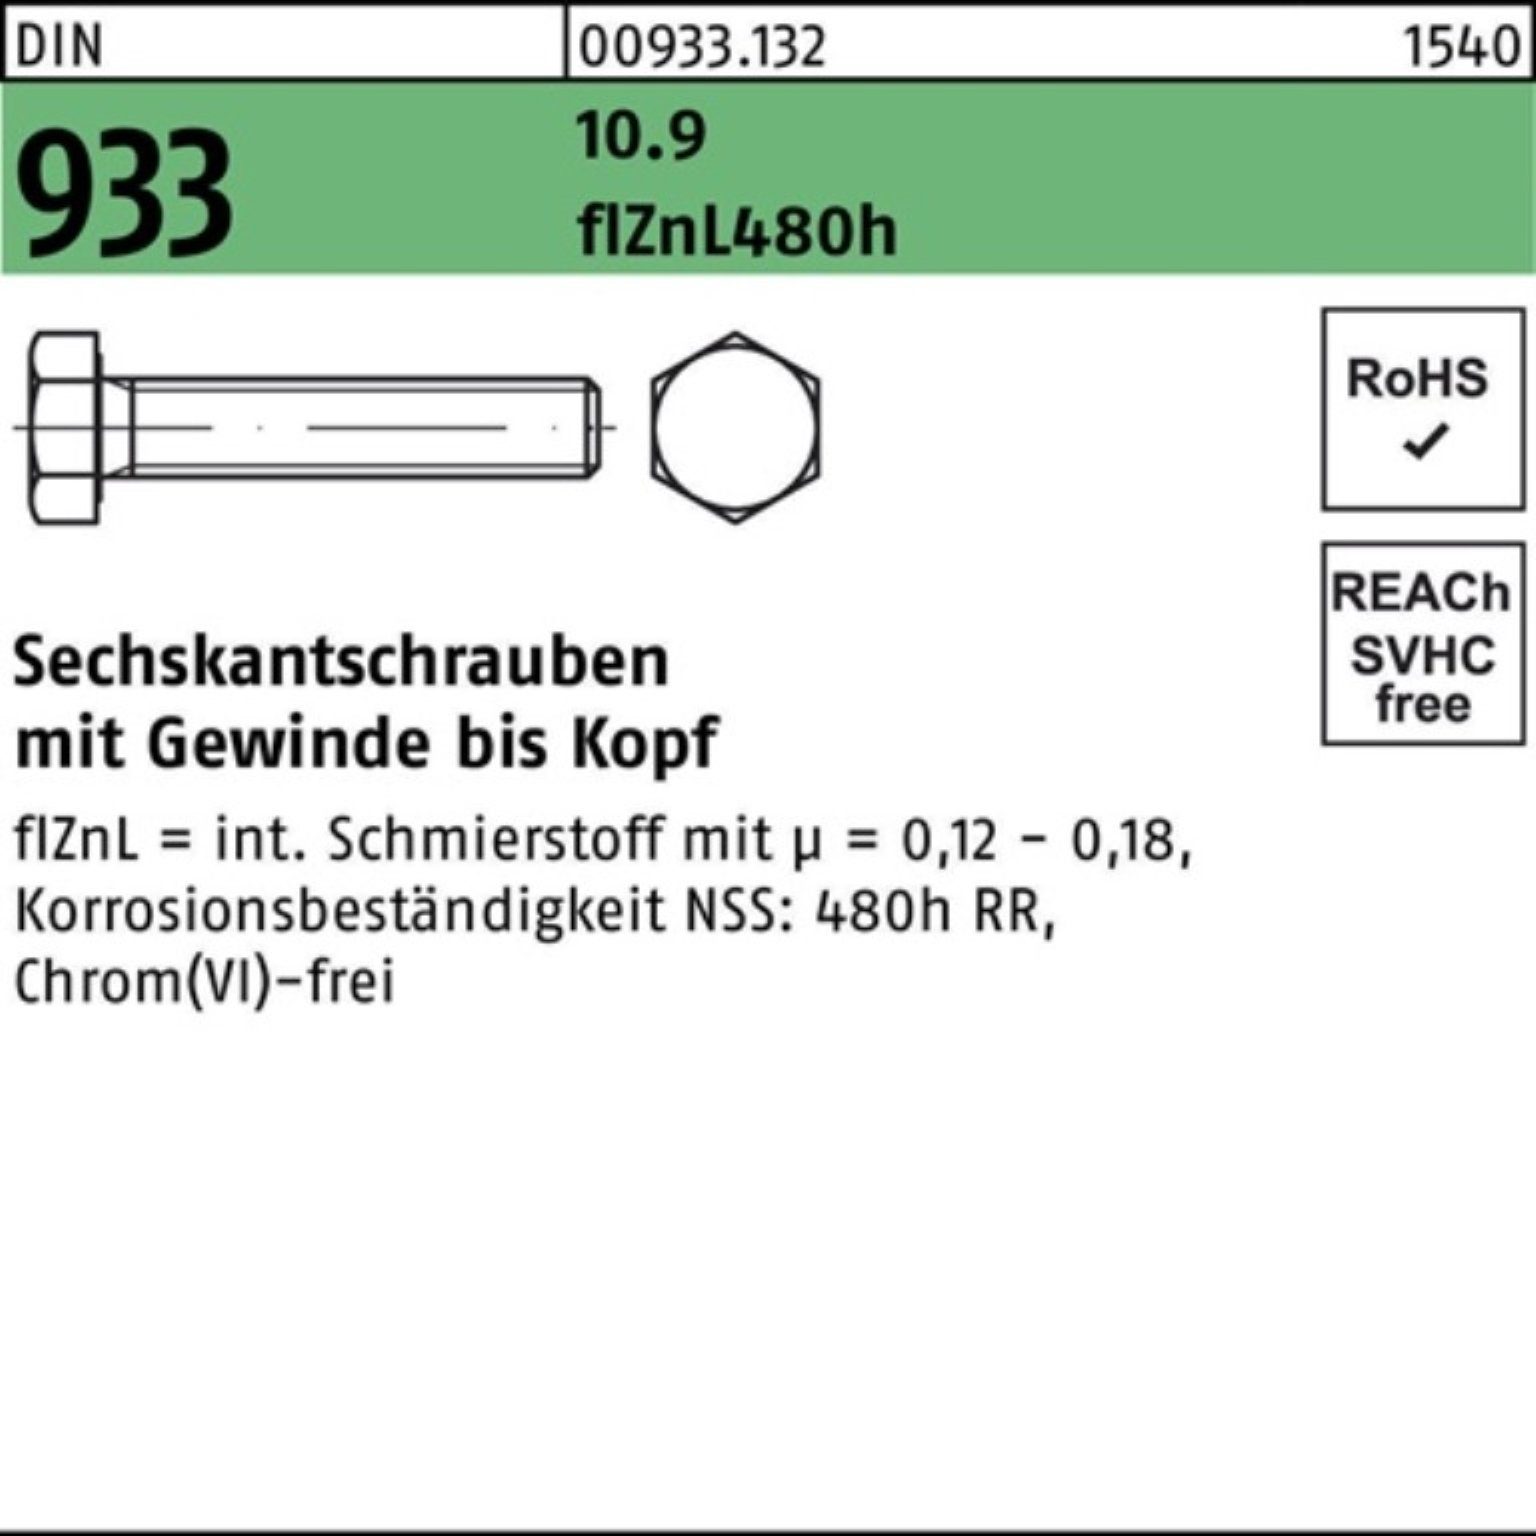 Reyher Sechskantschraube 100er Pack 100 DIN M16x 10.9 flZnL/nc/x/x/480 Sechskantschraube VG 933